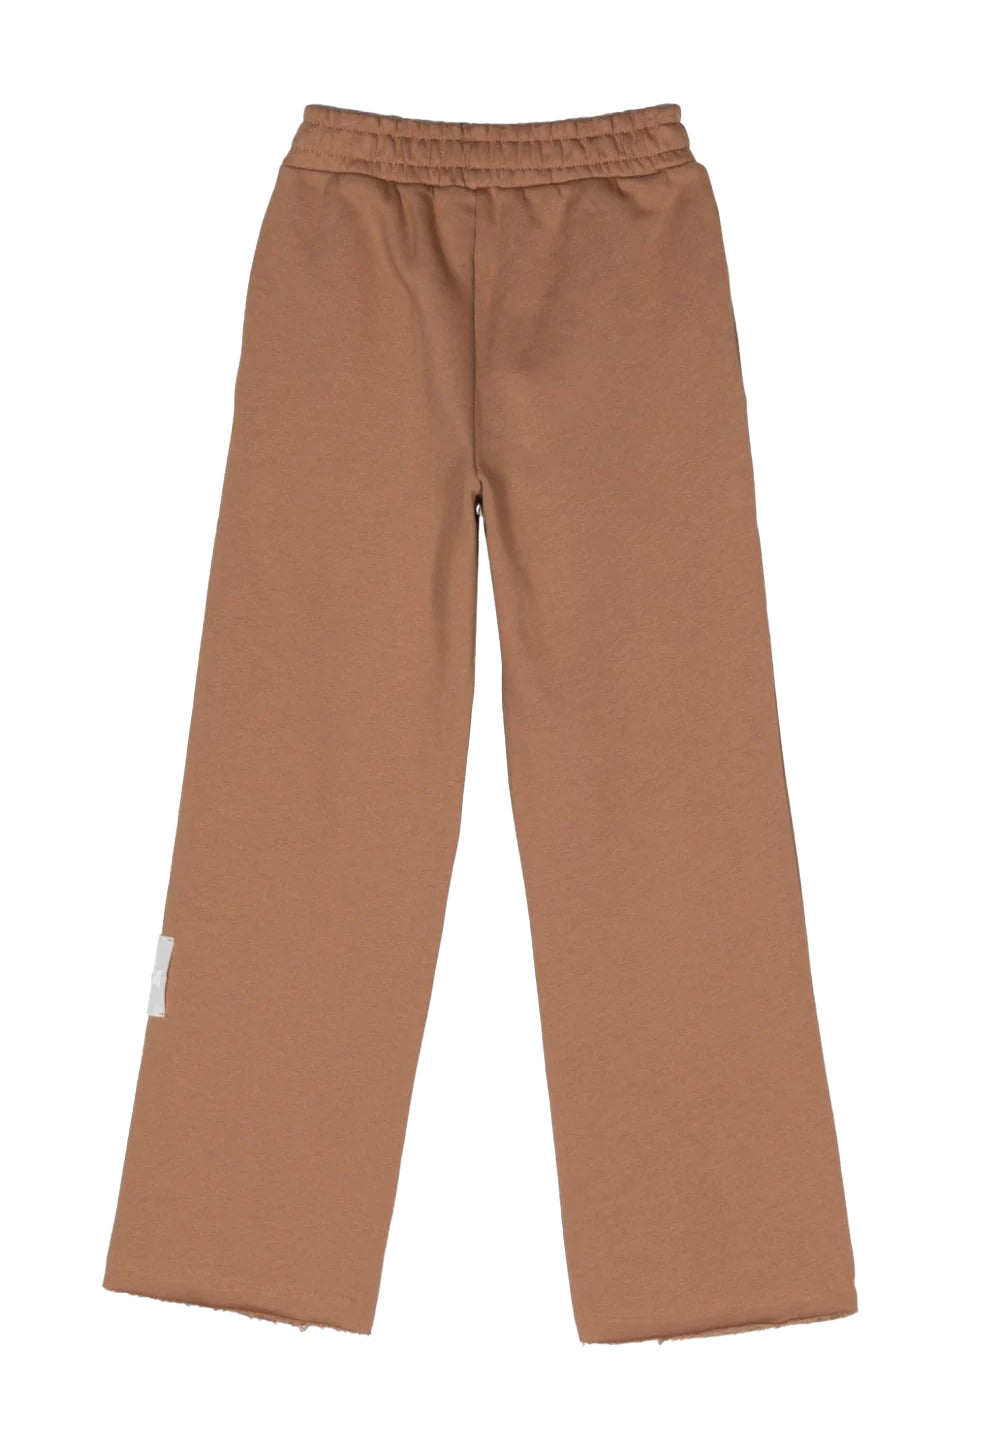 Brown sweatpants for children